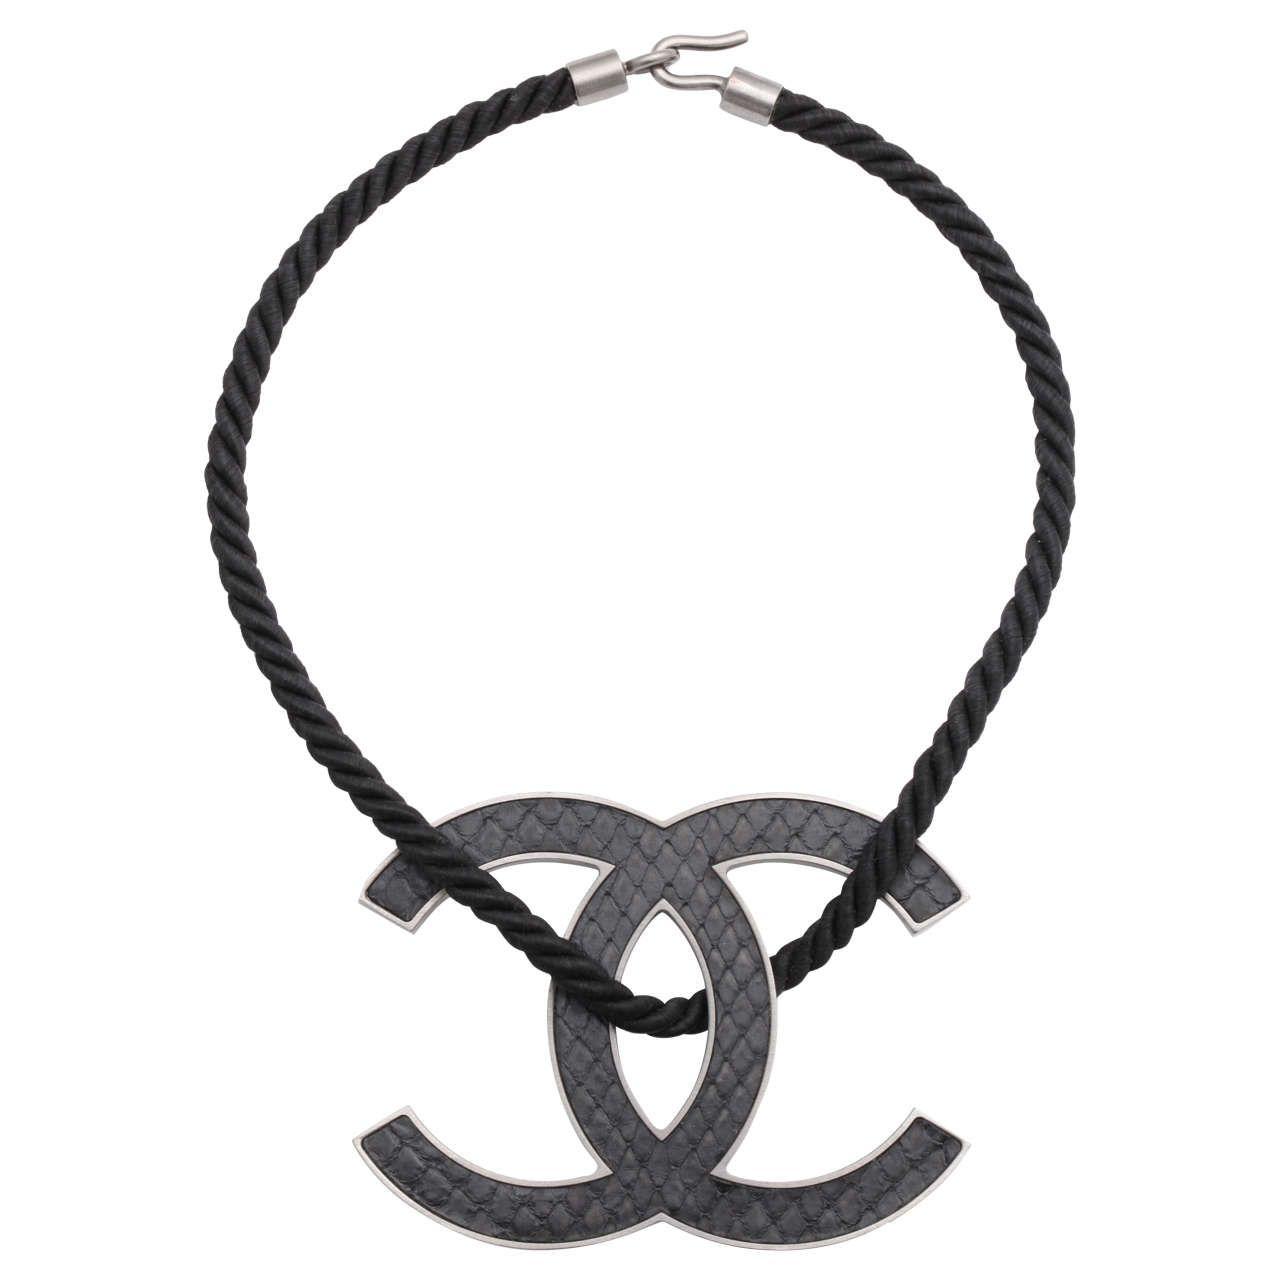 Large Chanel Logo - Chanel Large Black CC Logo Necklace at 1stdibs